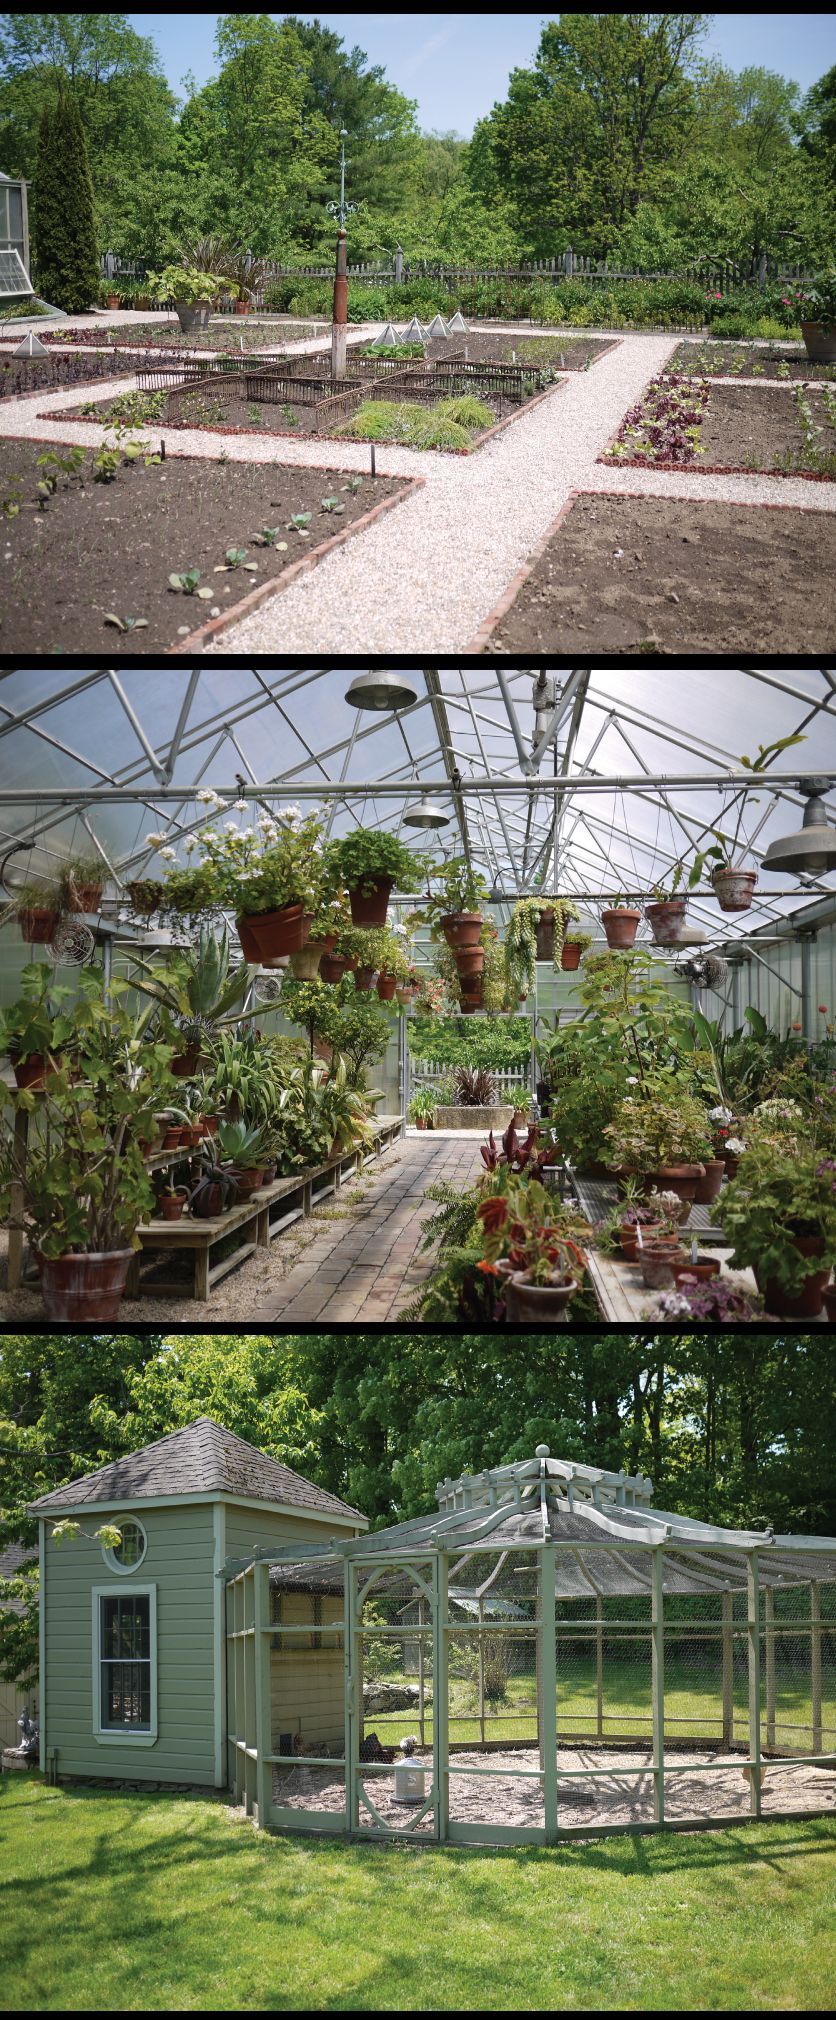 Vegetable garden, greenhouse and fabulous chicken coop.